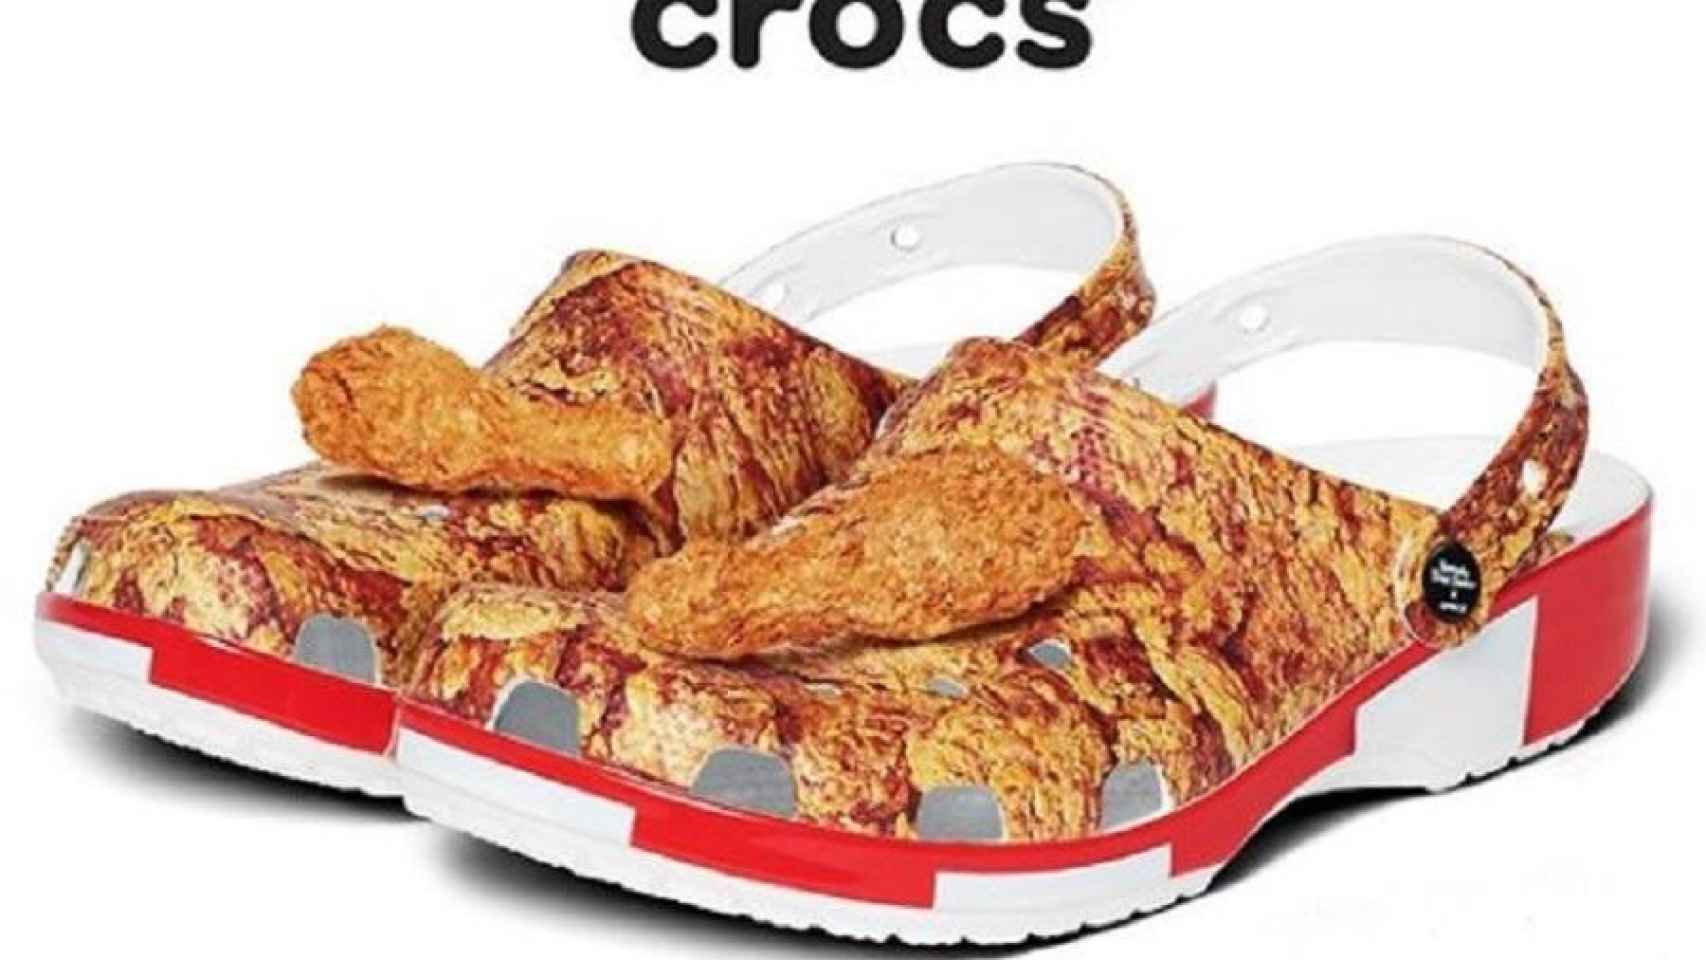 Crocs con olor a pollo frito / CROCS